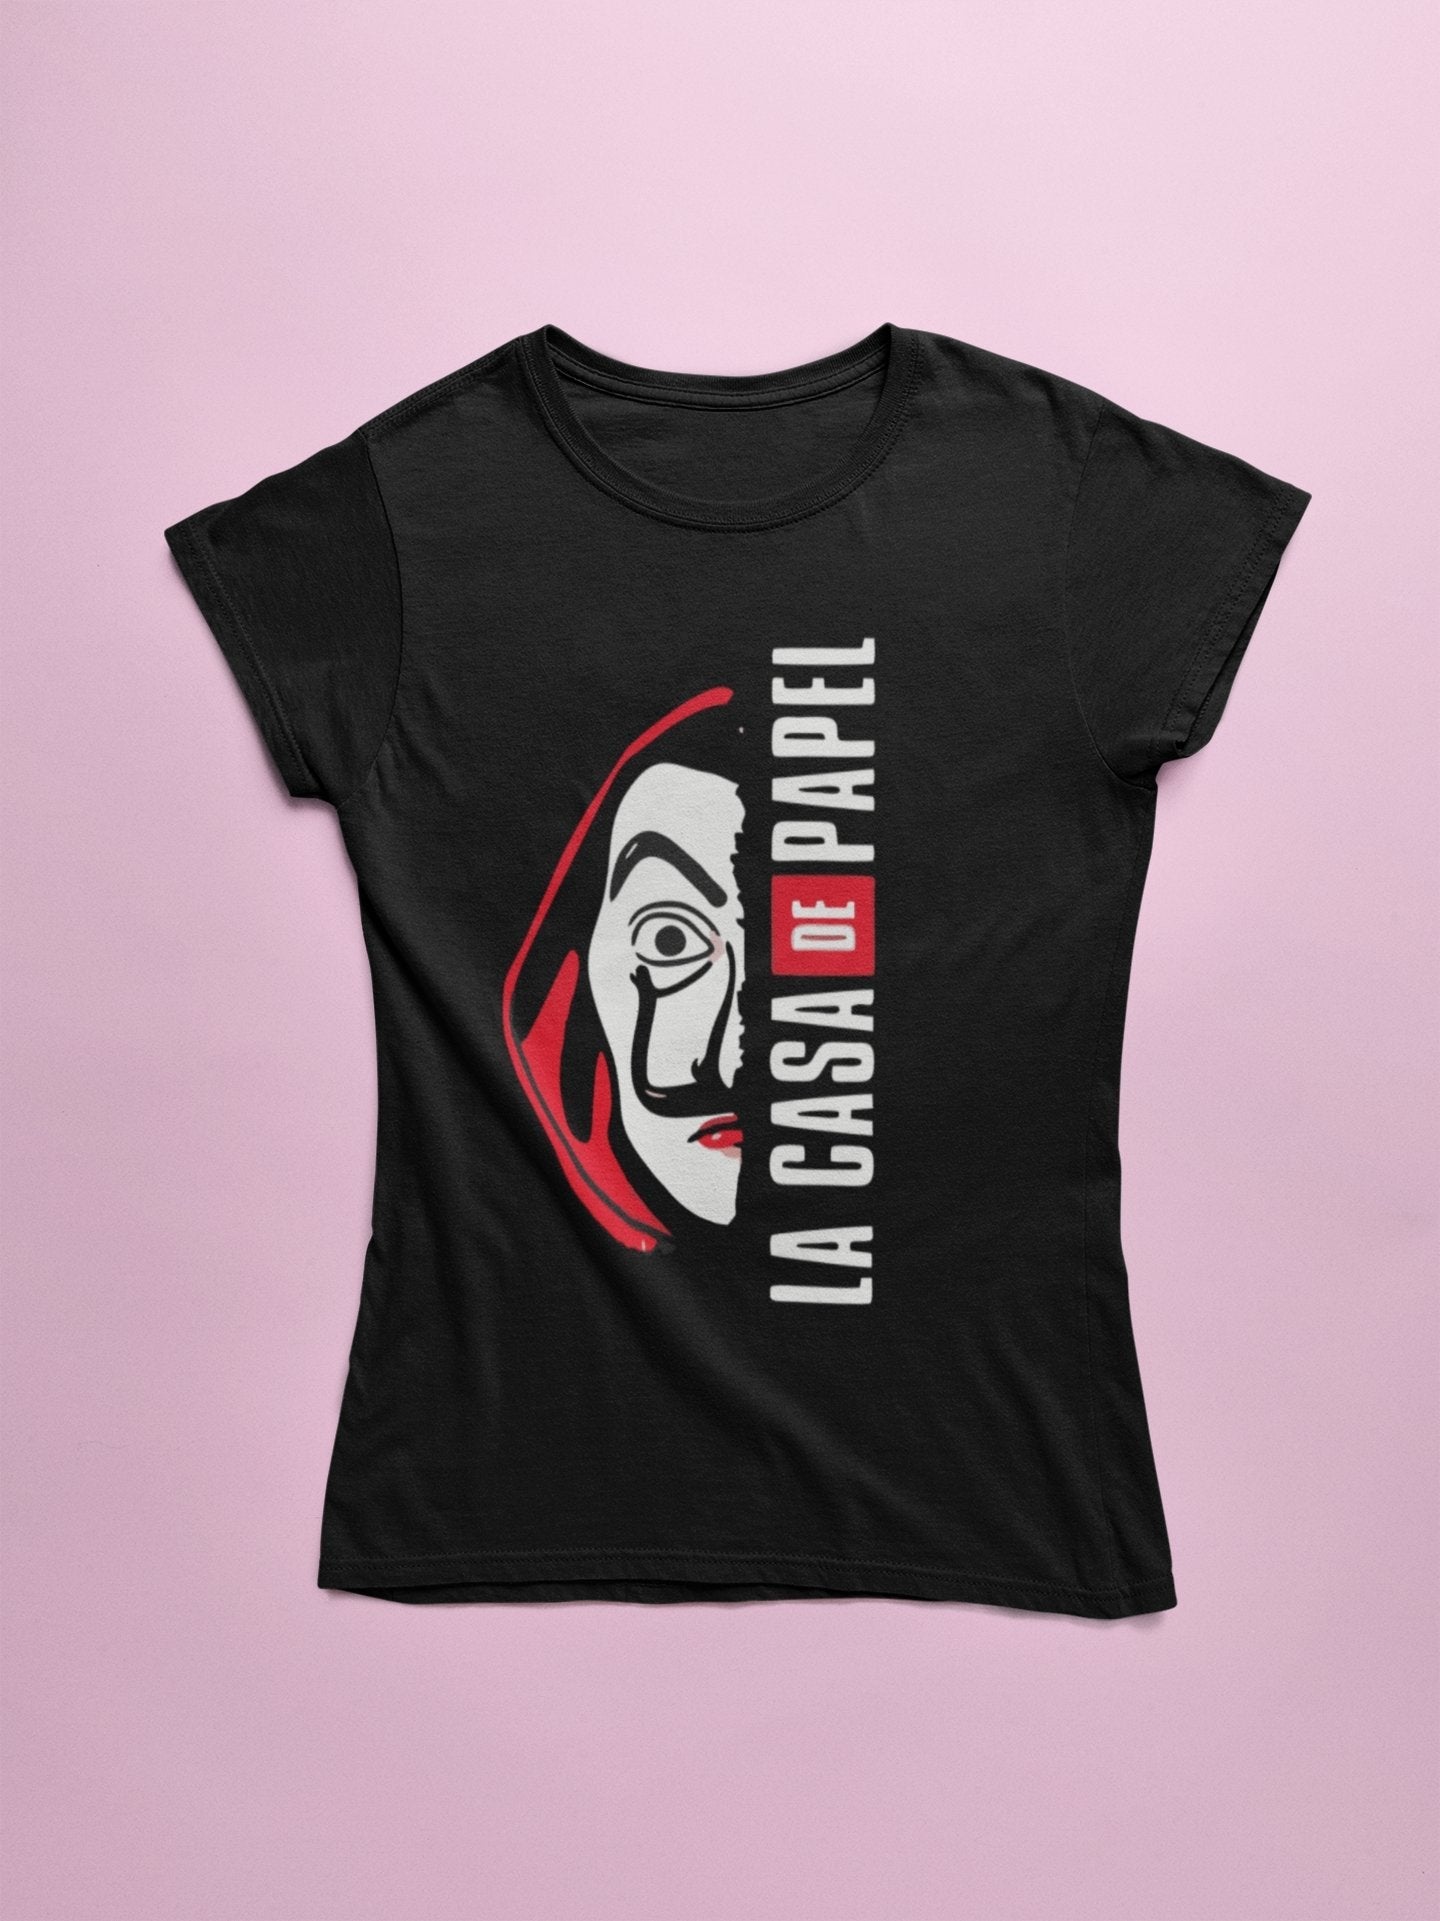 Money heist Graphic T Shirt for Women - Insane Tees